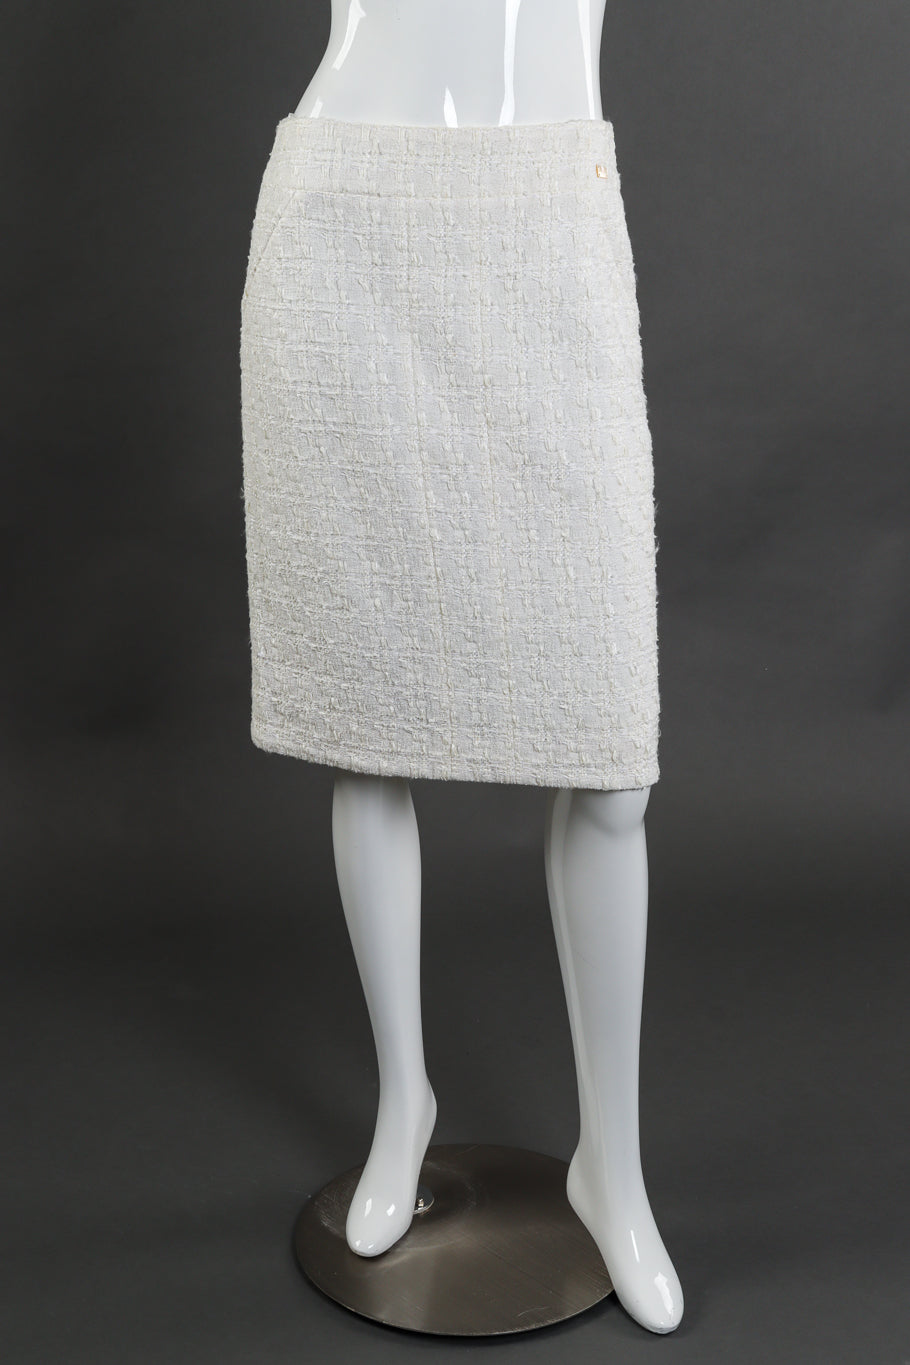 Vintage Chanel 2005 Cruise Woven Skirt Suit skirt front on mannequin @recessla